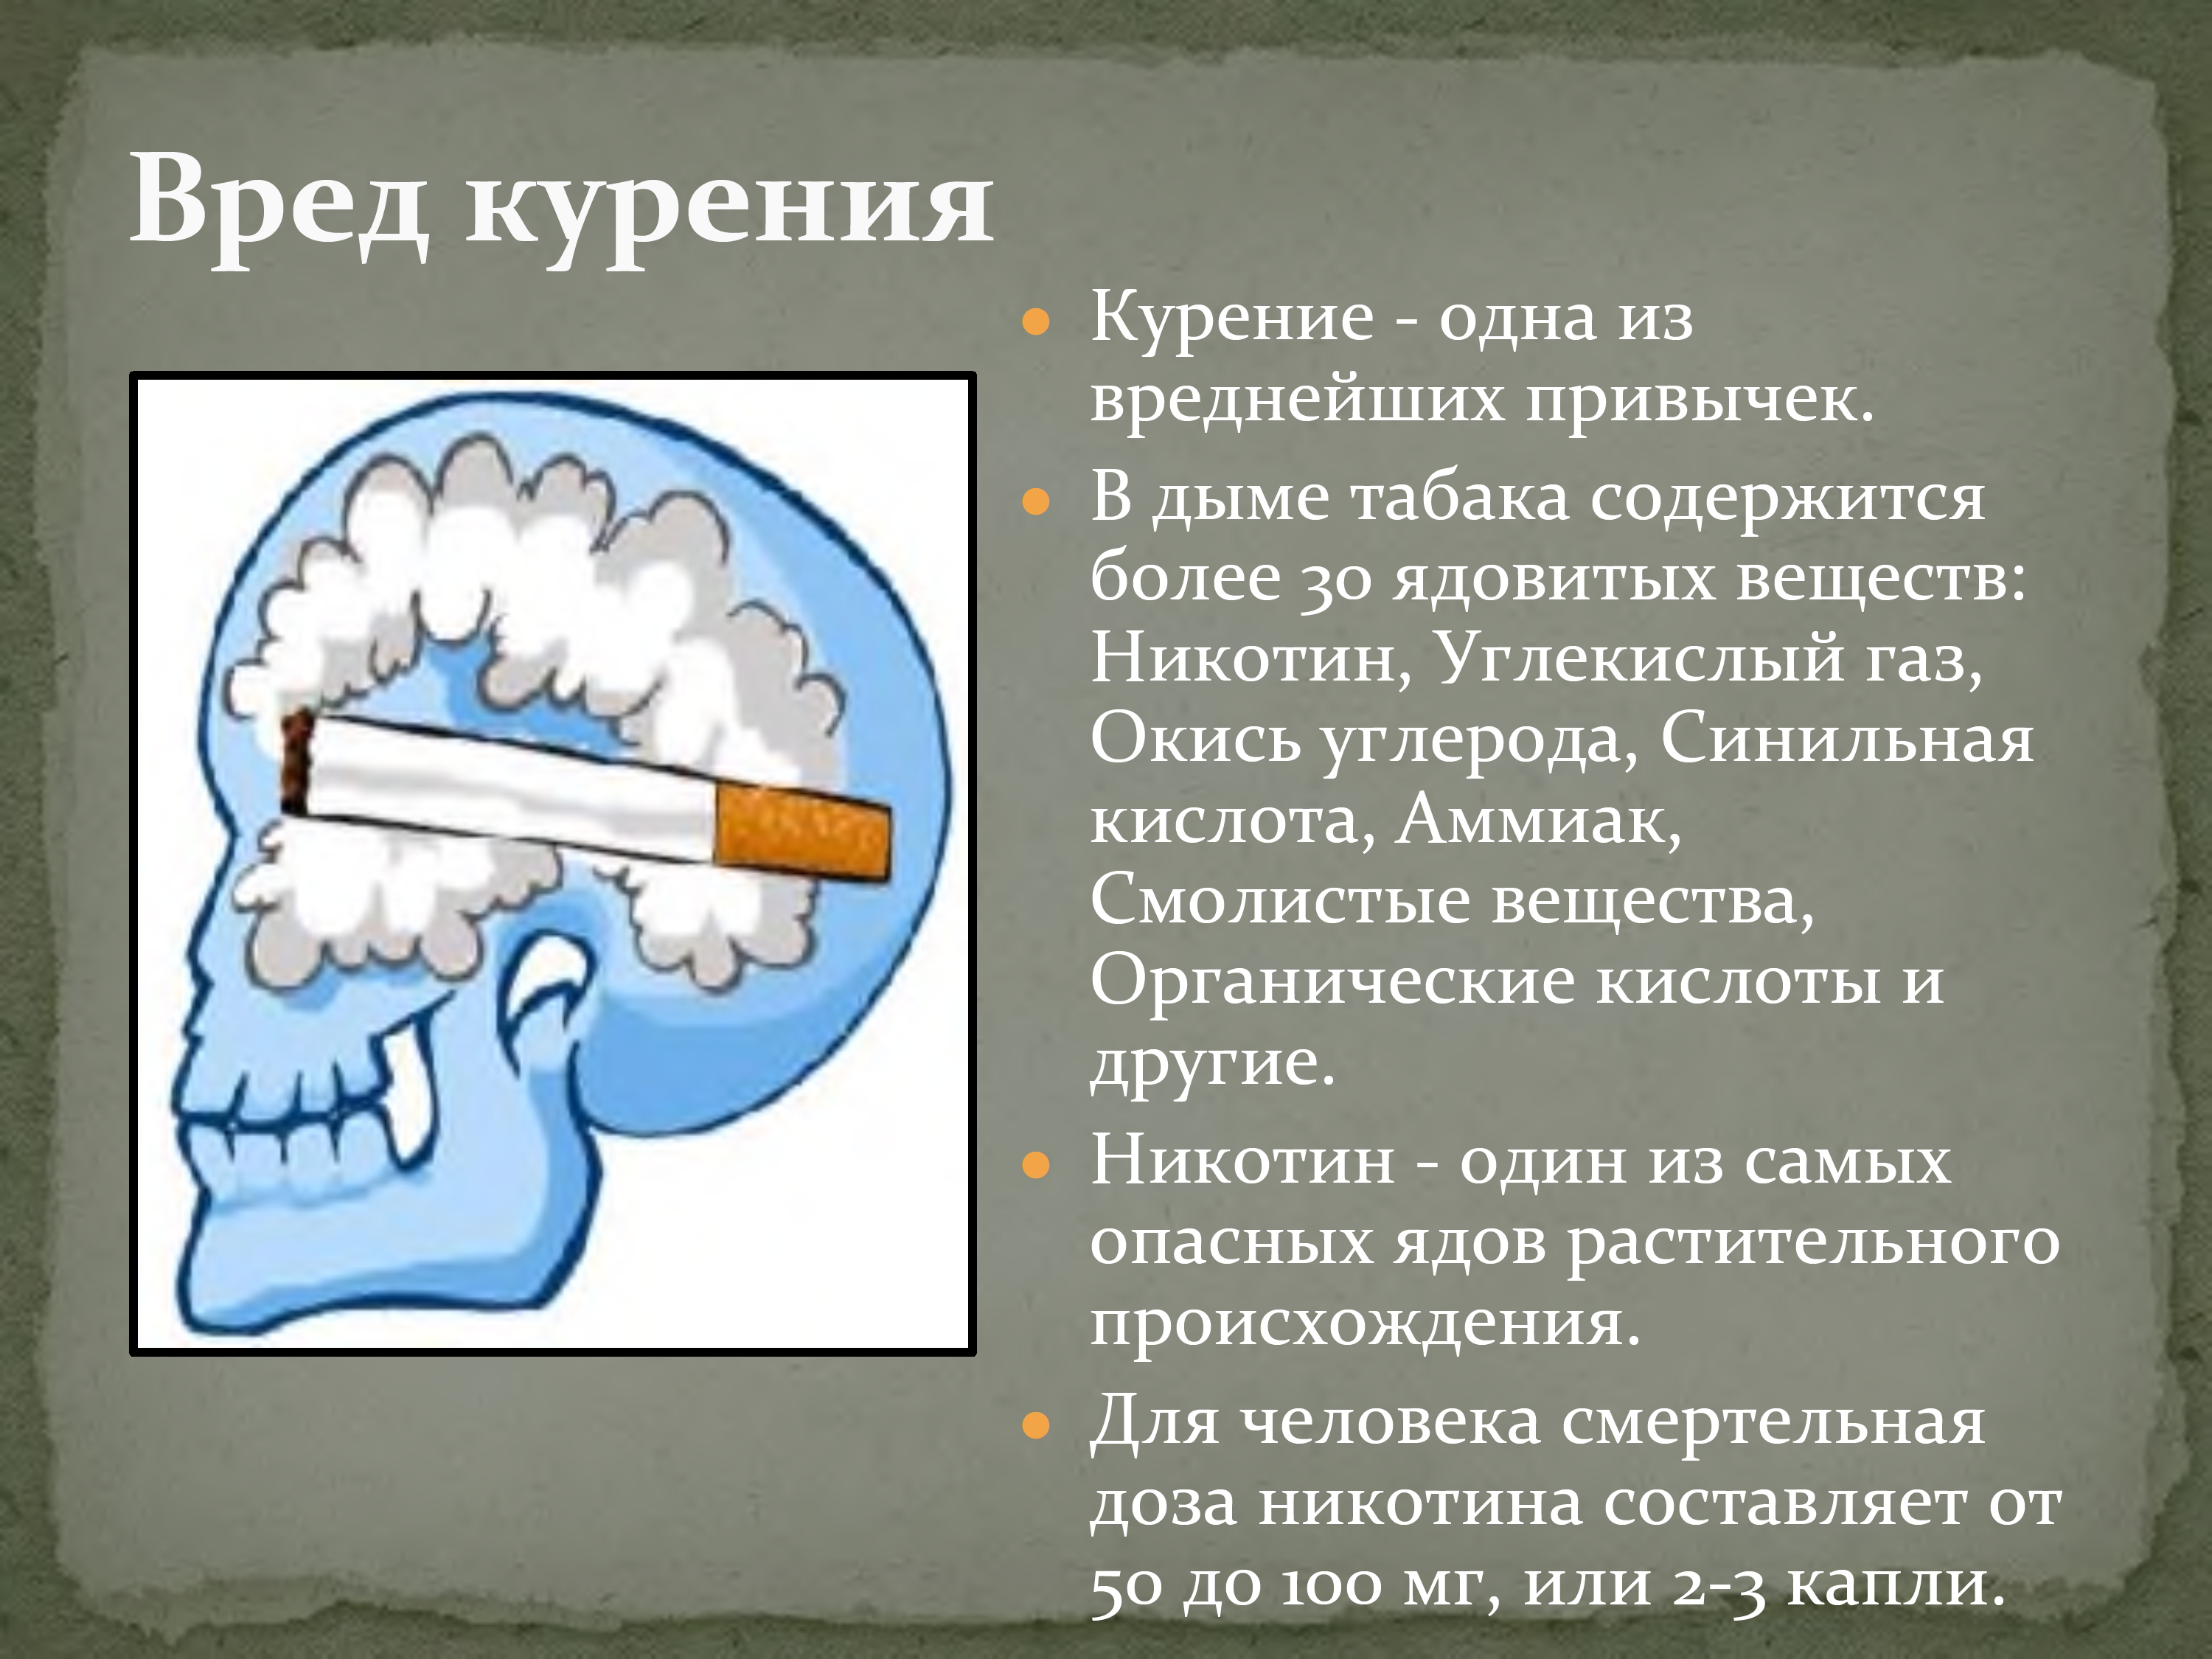 Сообщение о вреде табака